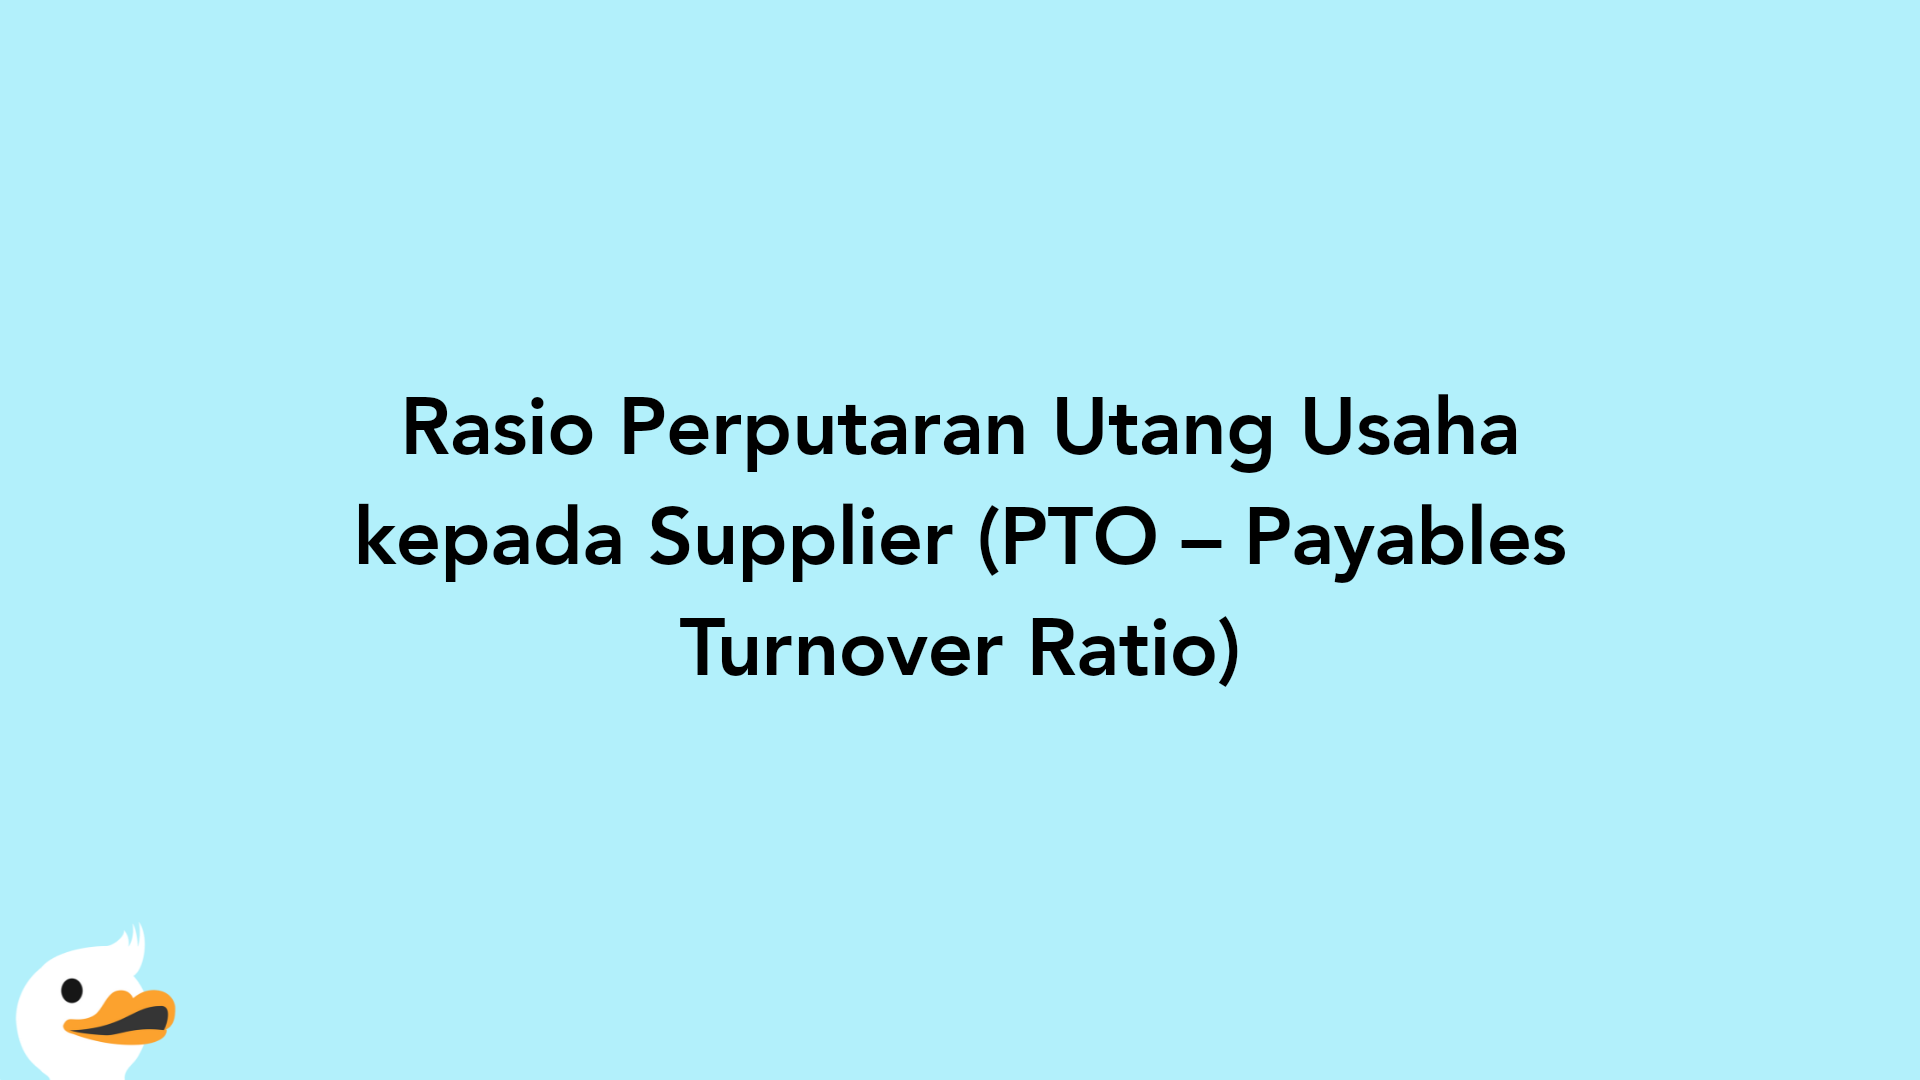 Rasio Perputaran Utang Usaha kepada Supplier (PTO – Payables Turnover Ratio)